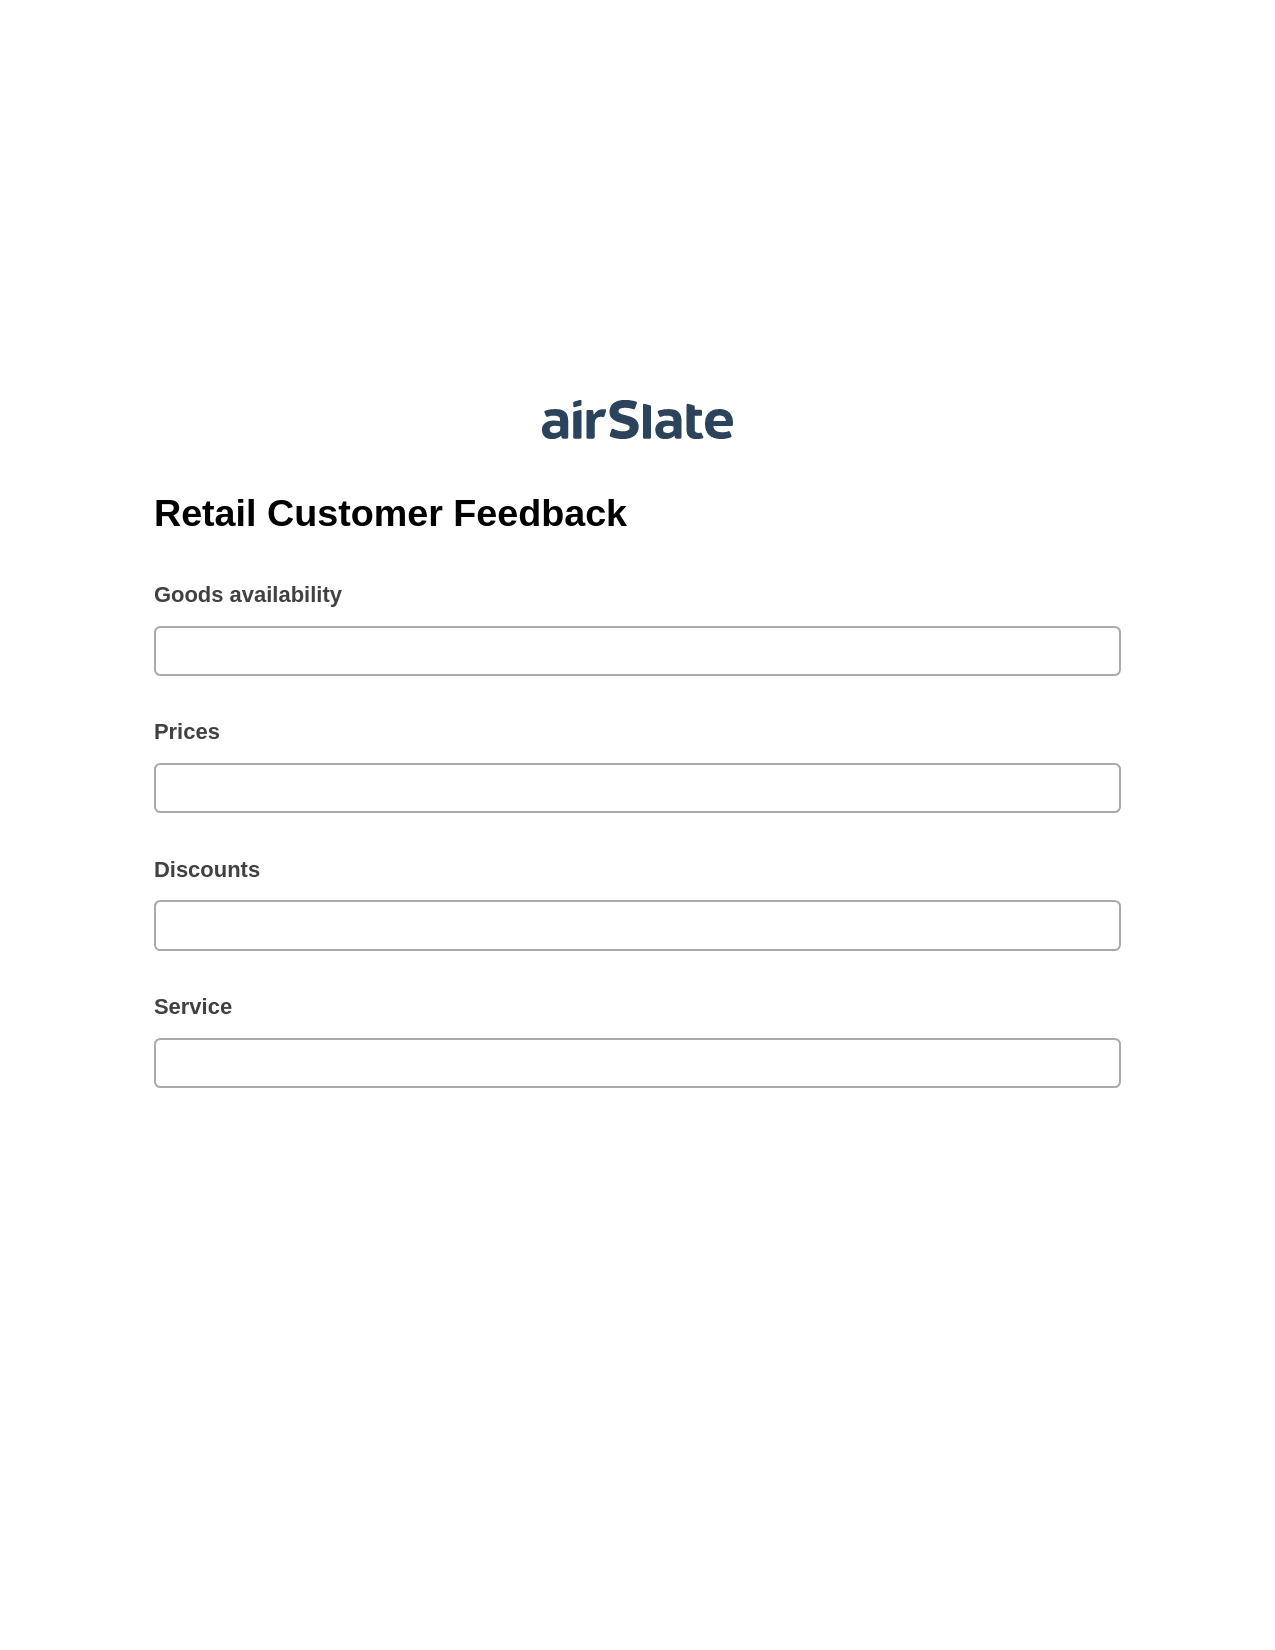 Multirole Retail Customer Feedback Pre-fill from CSV File Bot, Update NetSuite Records Bot, Box Bot